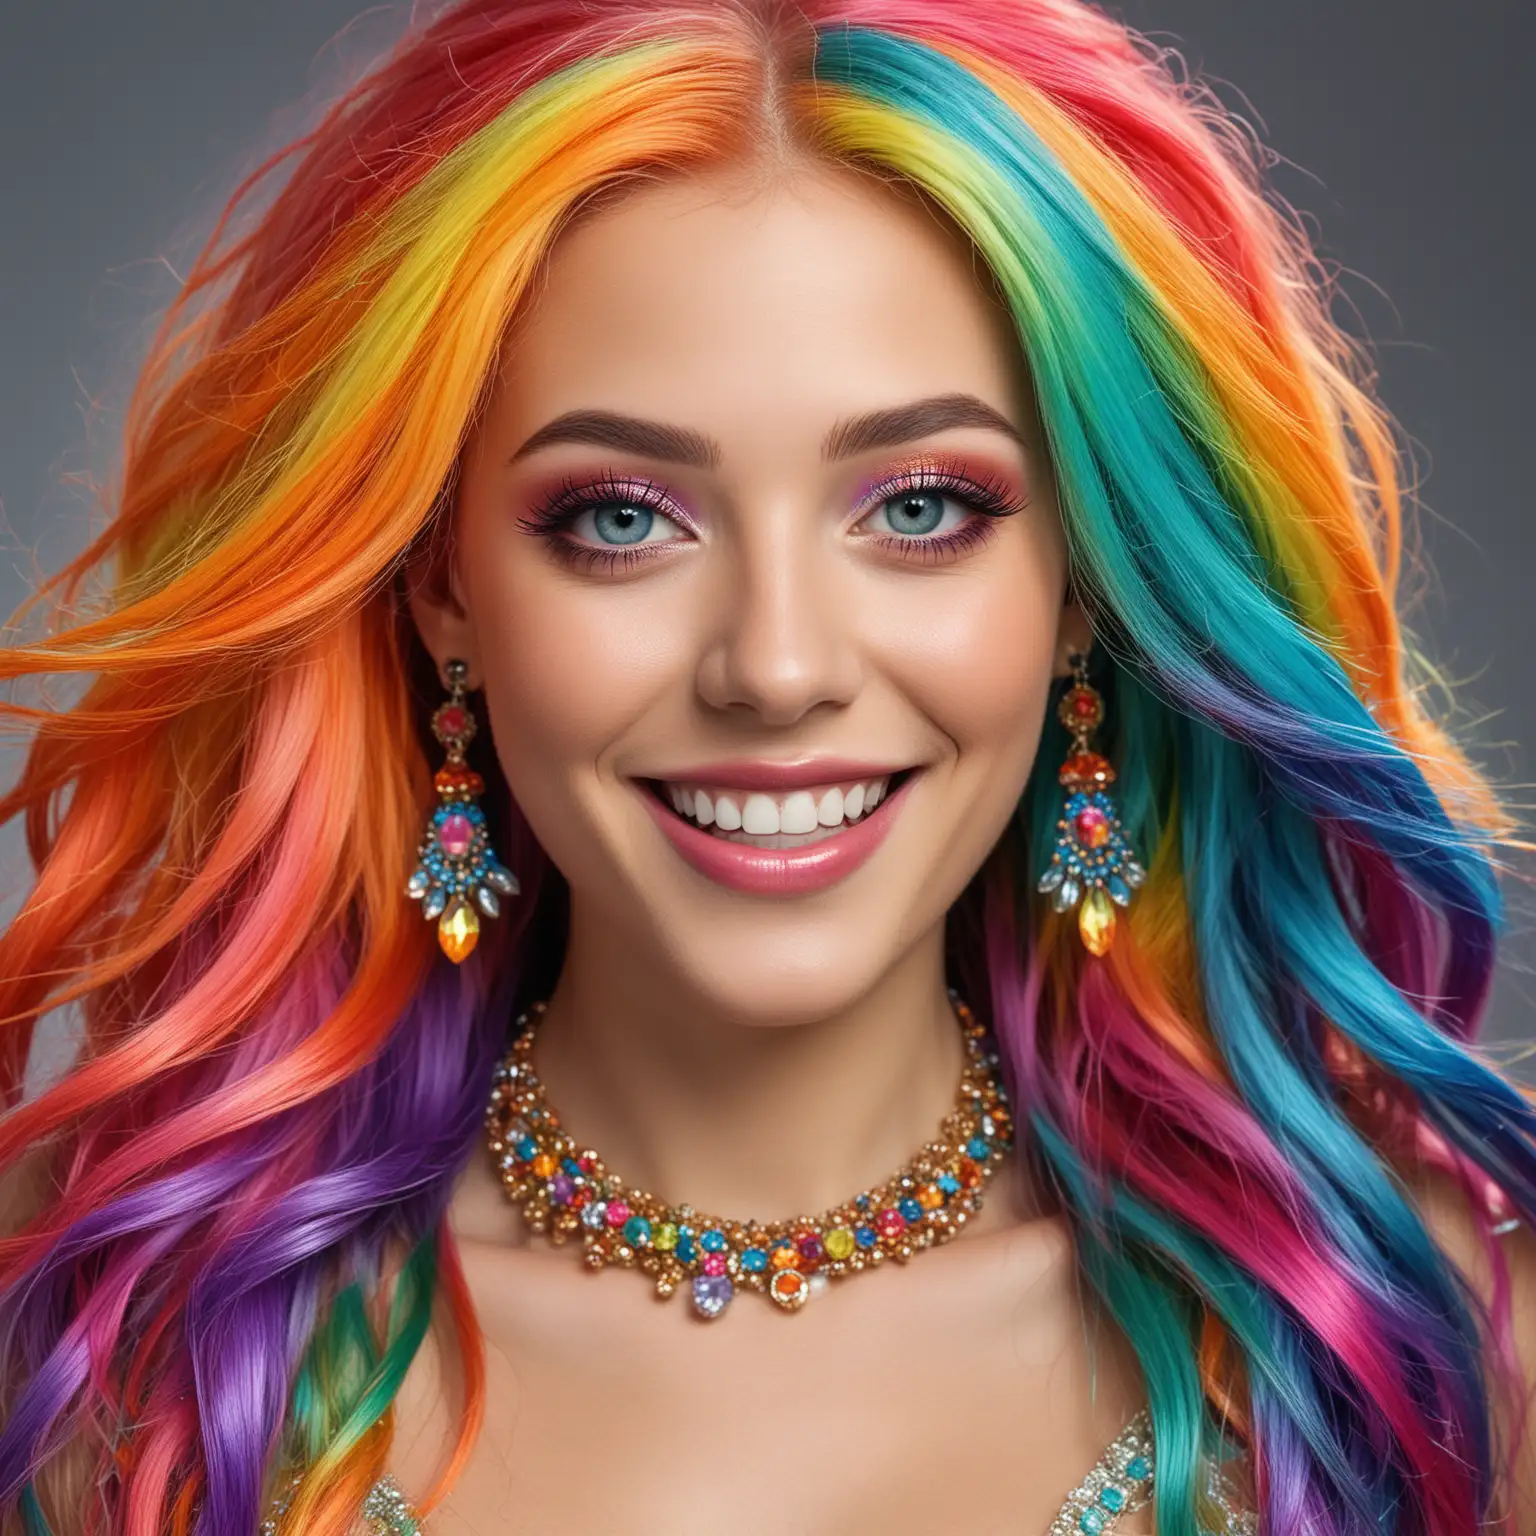 Radiant Rainbow Princess Portrait Playful Woman with Vibrant Multicolored Hair and Joyful Smile